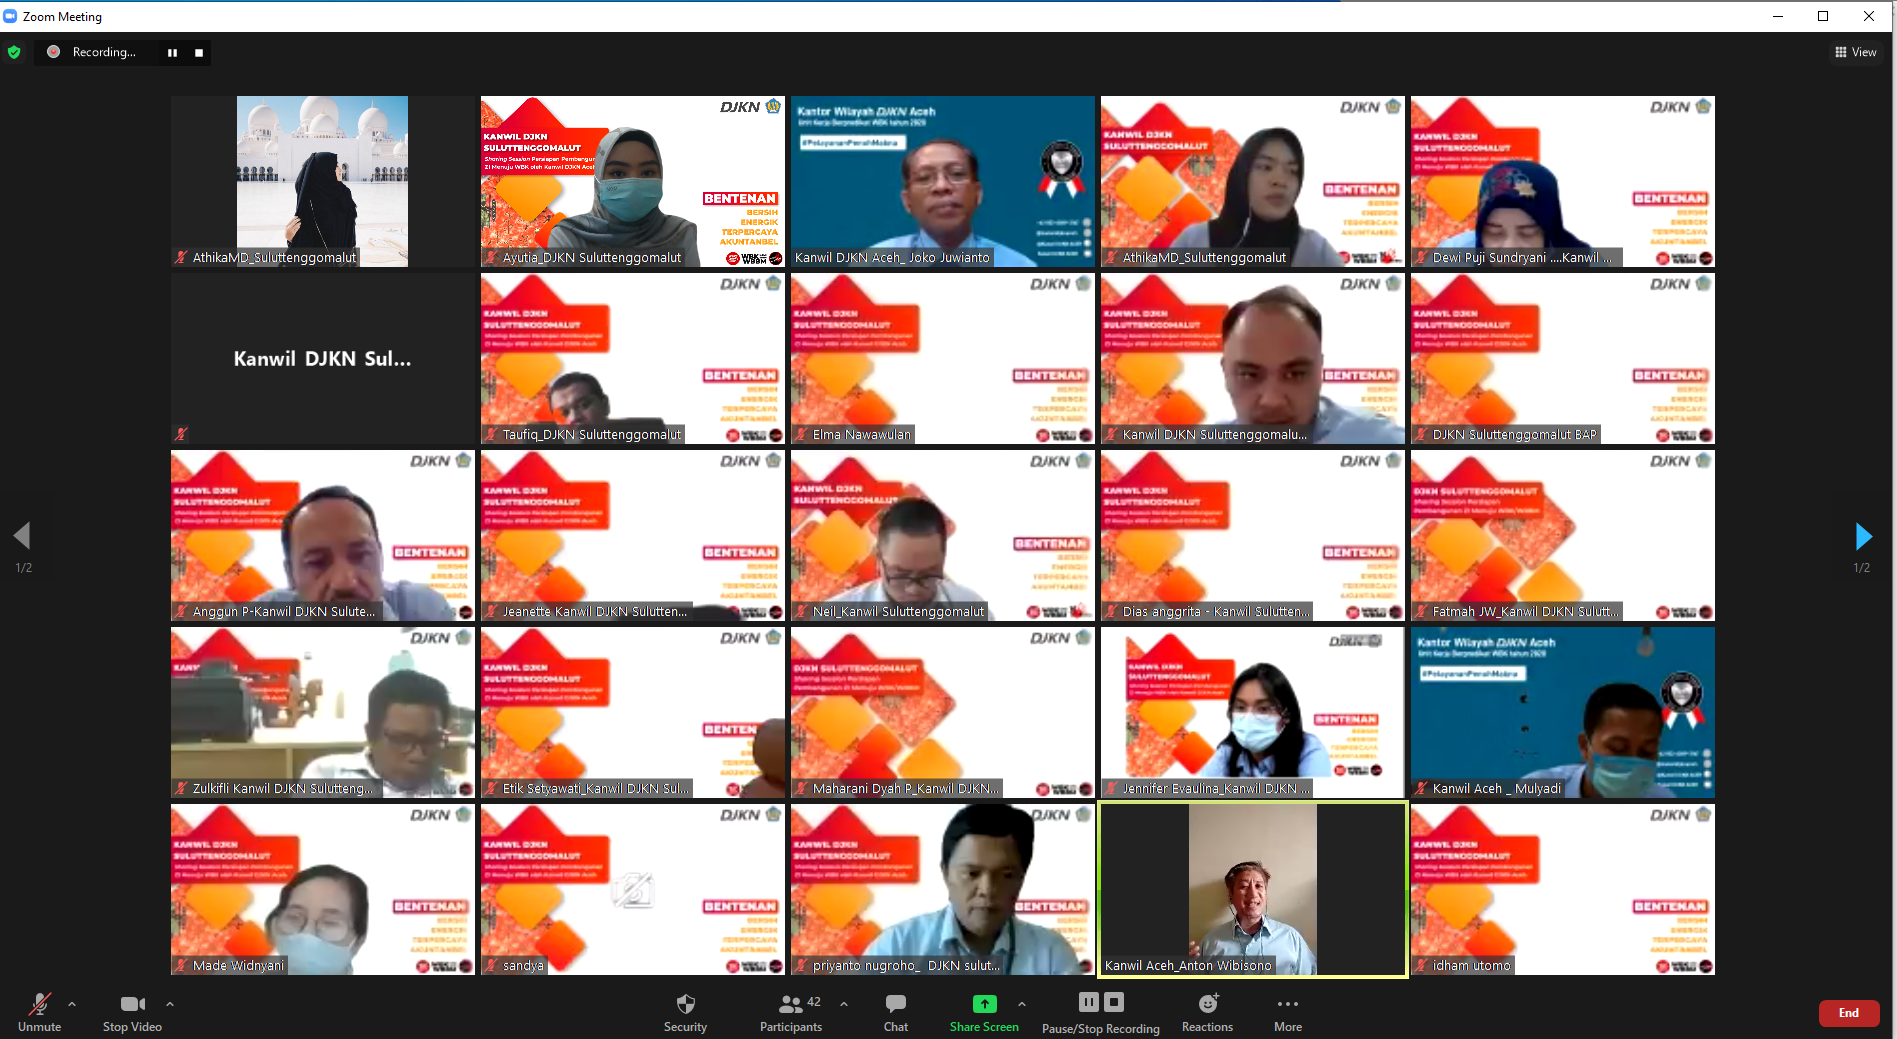 Sharing Session Persiapan Pembangunan ZI Menuju WBK bersama Kanwil DJKN Aceh: Kalau Mau Pasti Bisa